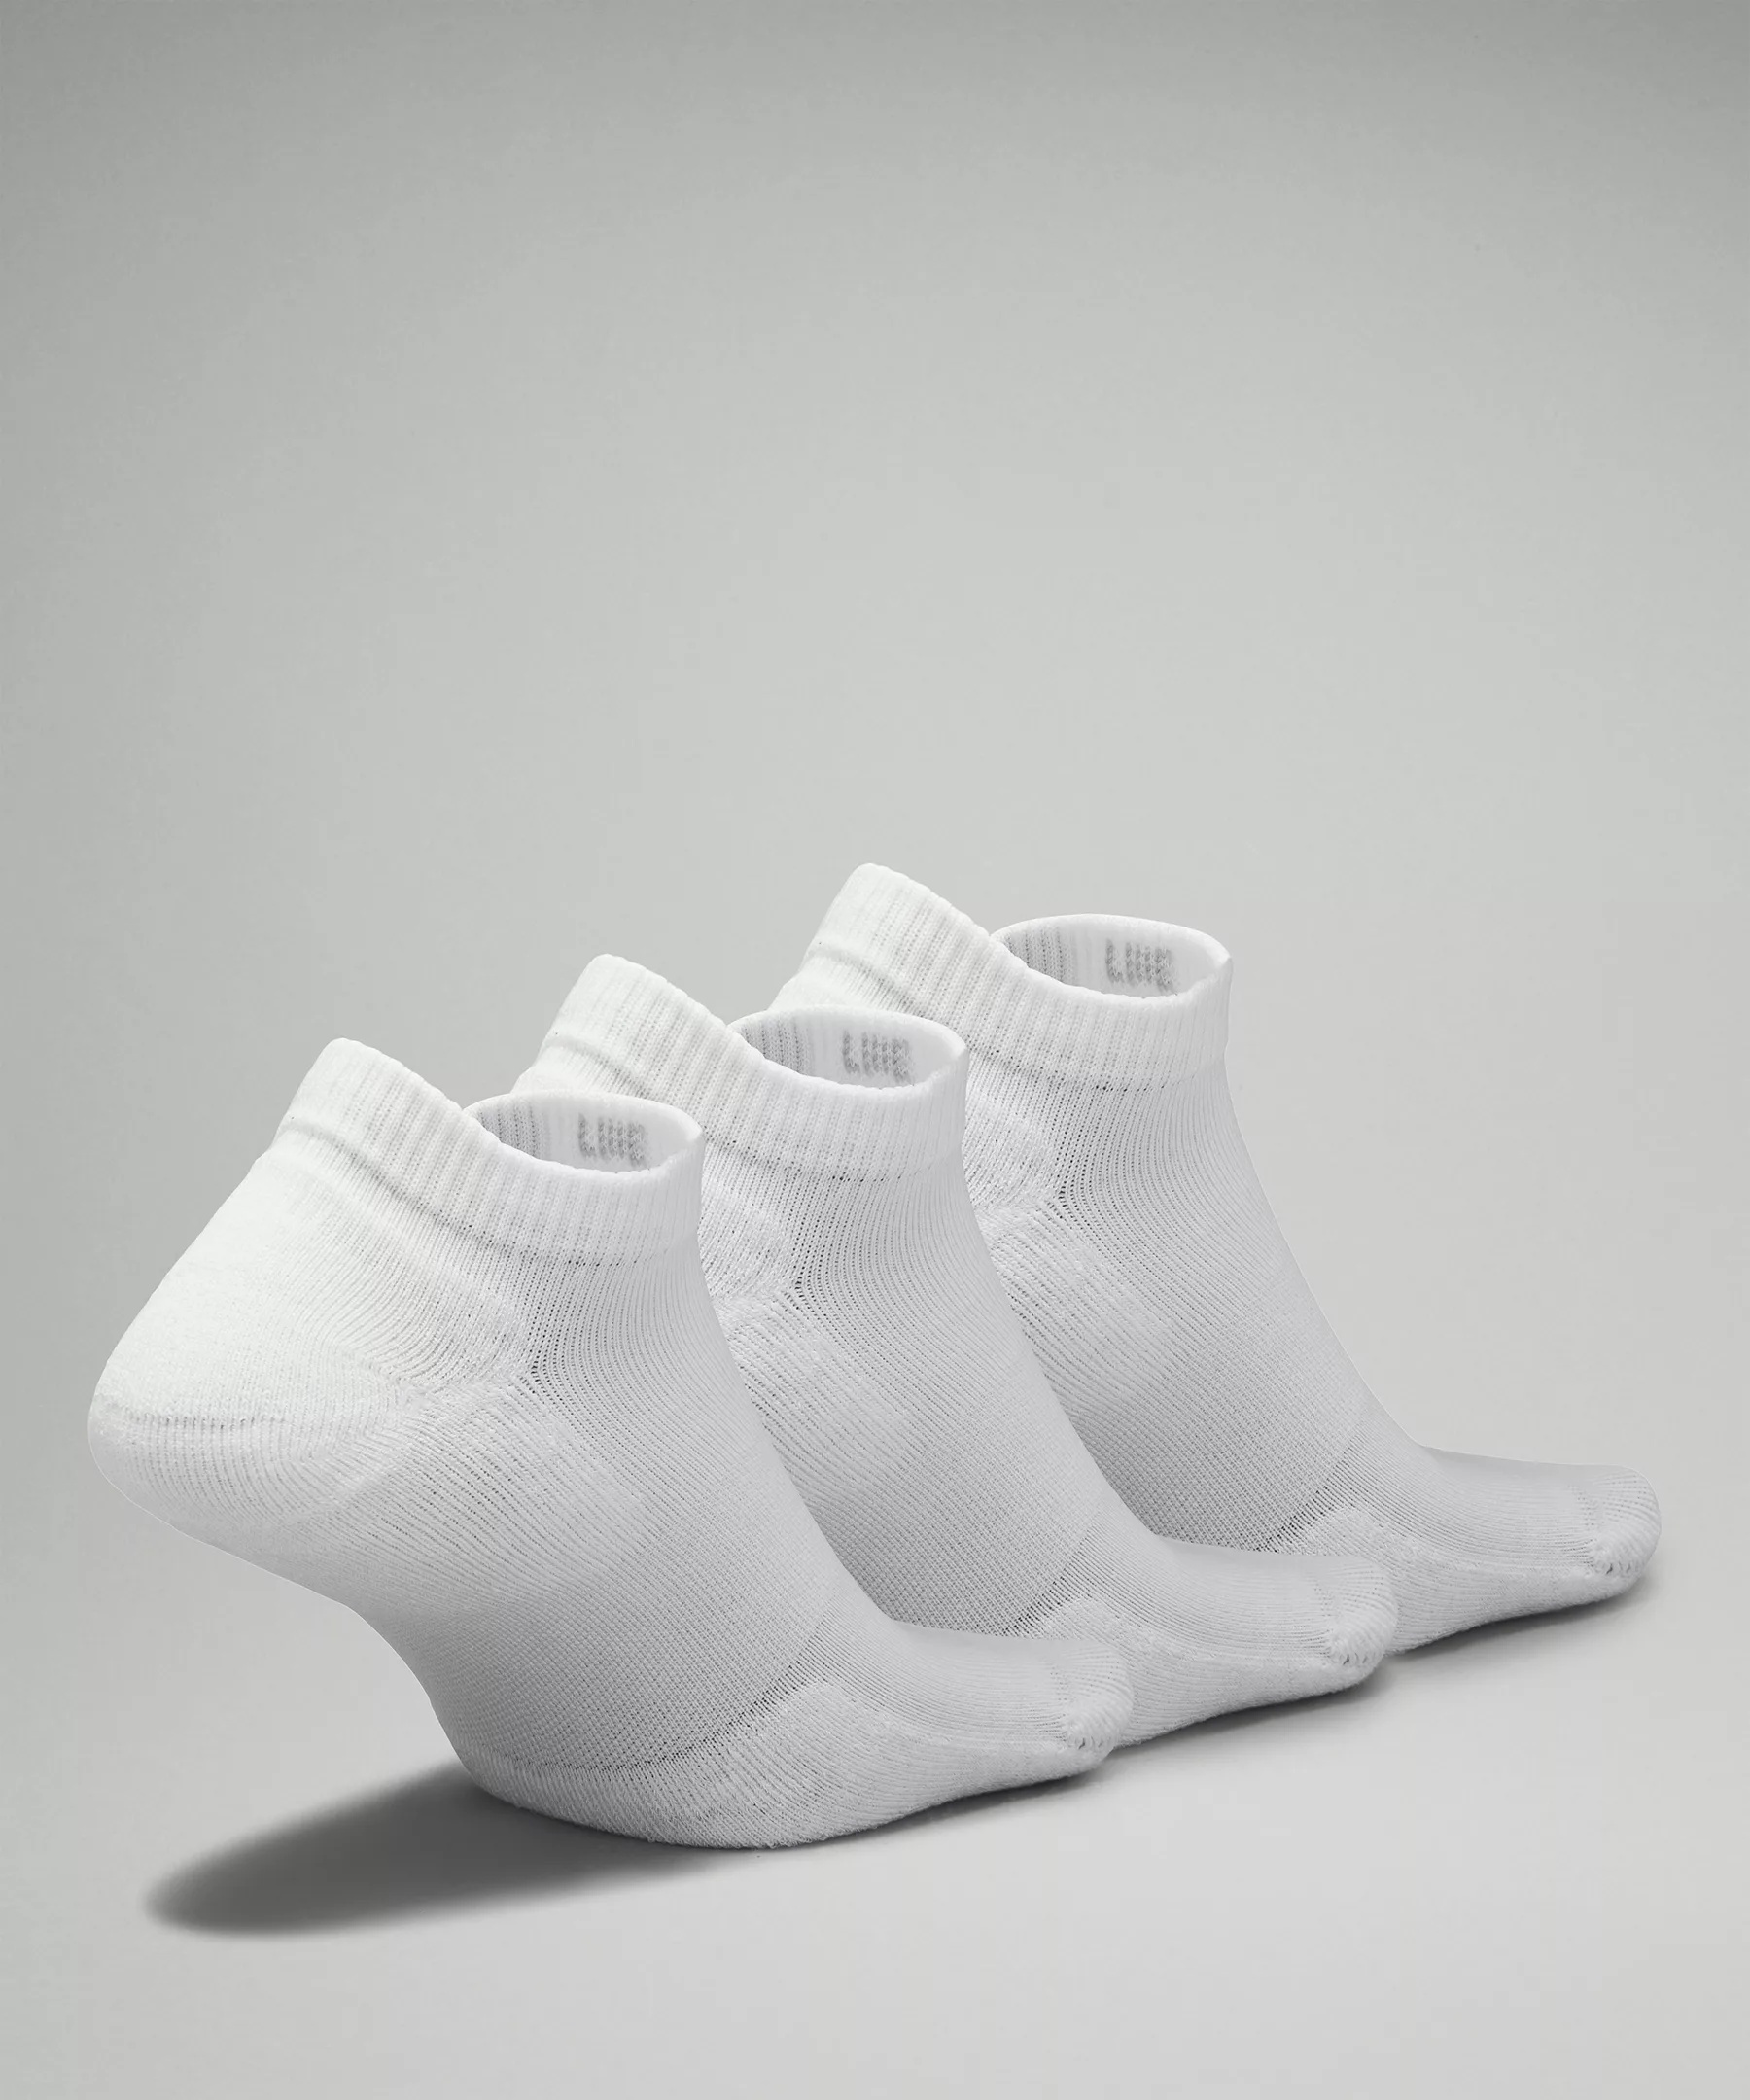 Men's Daily Stride Comfort Low-Ankle Socks *3 Pack - 3